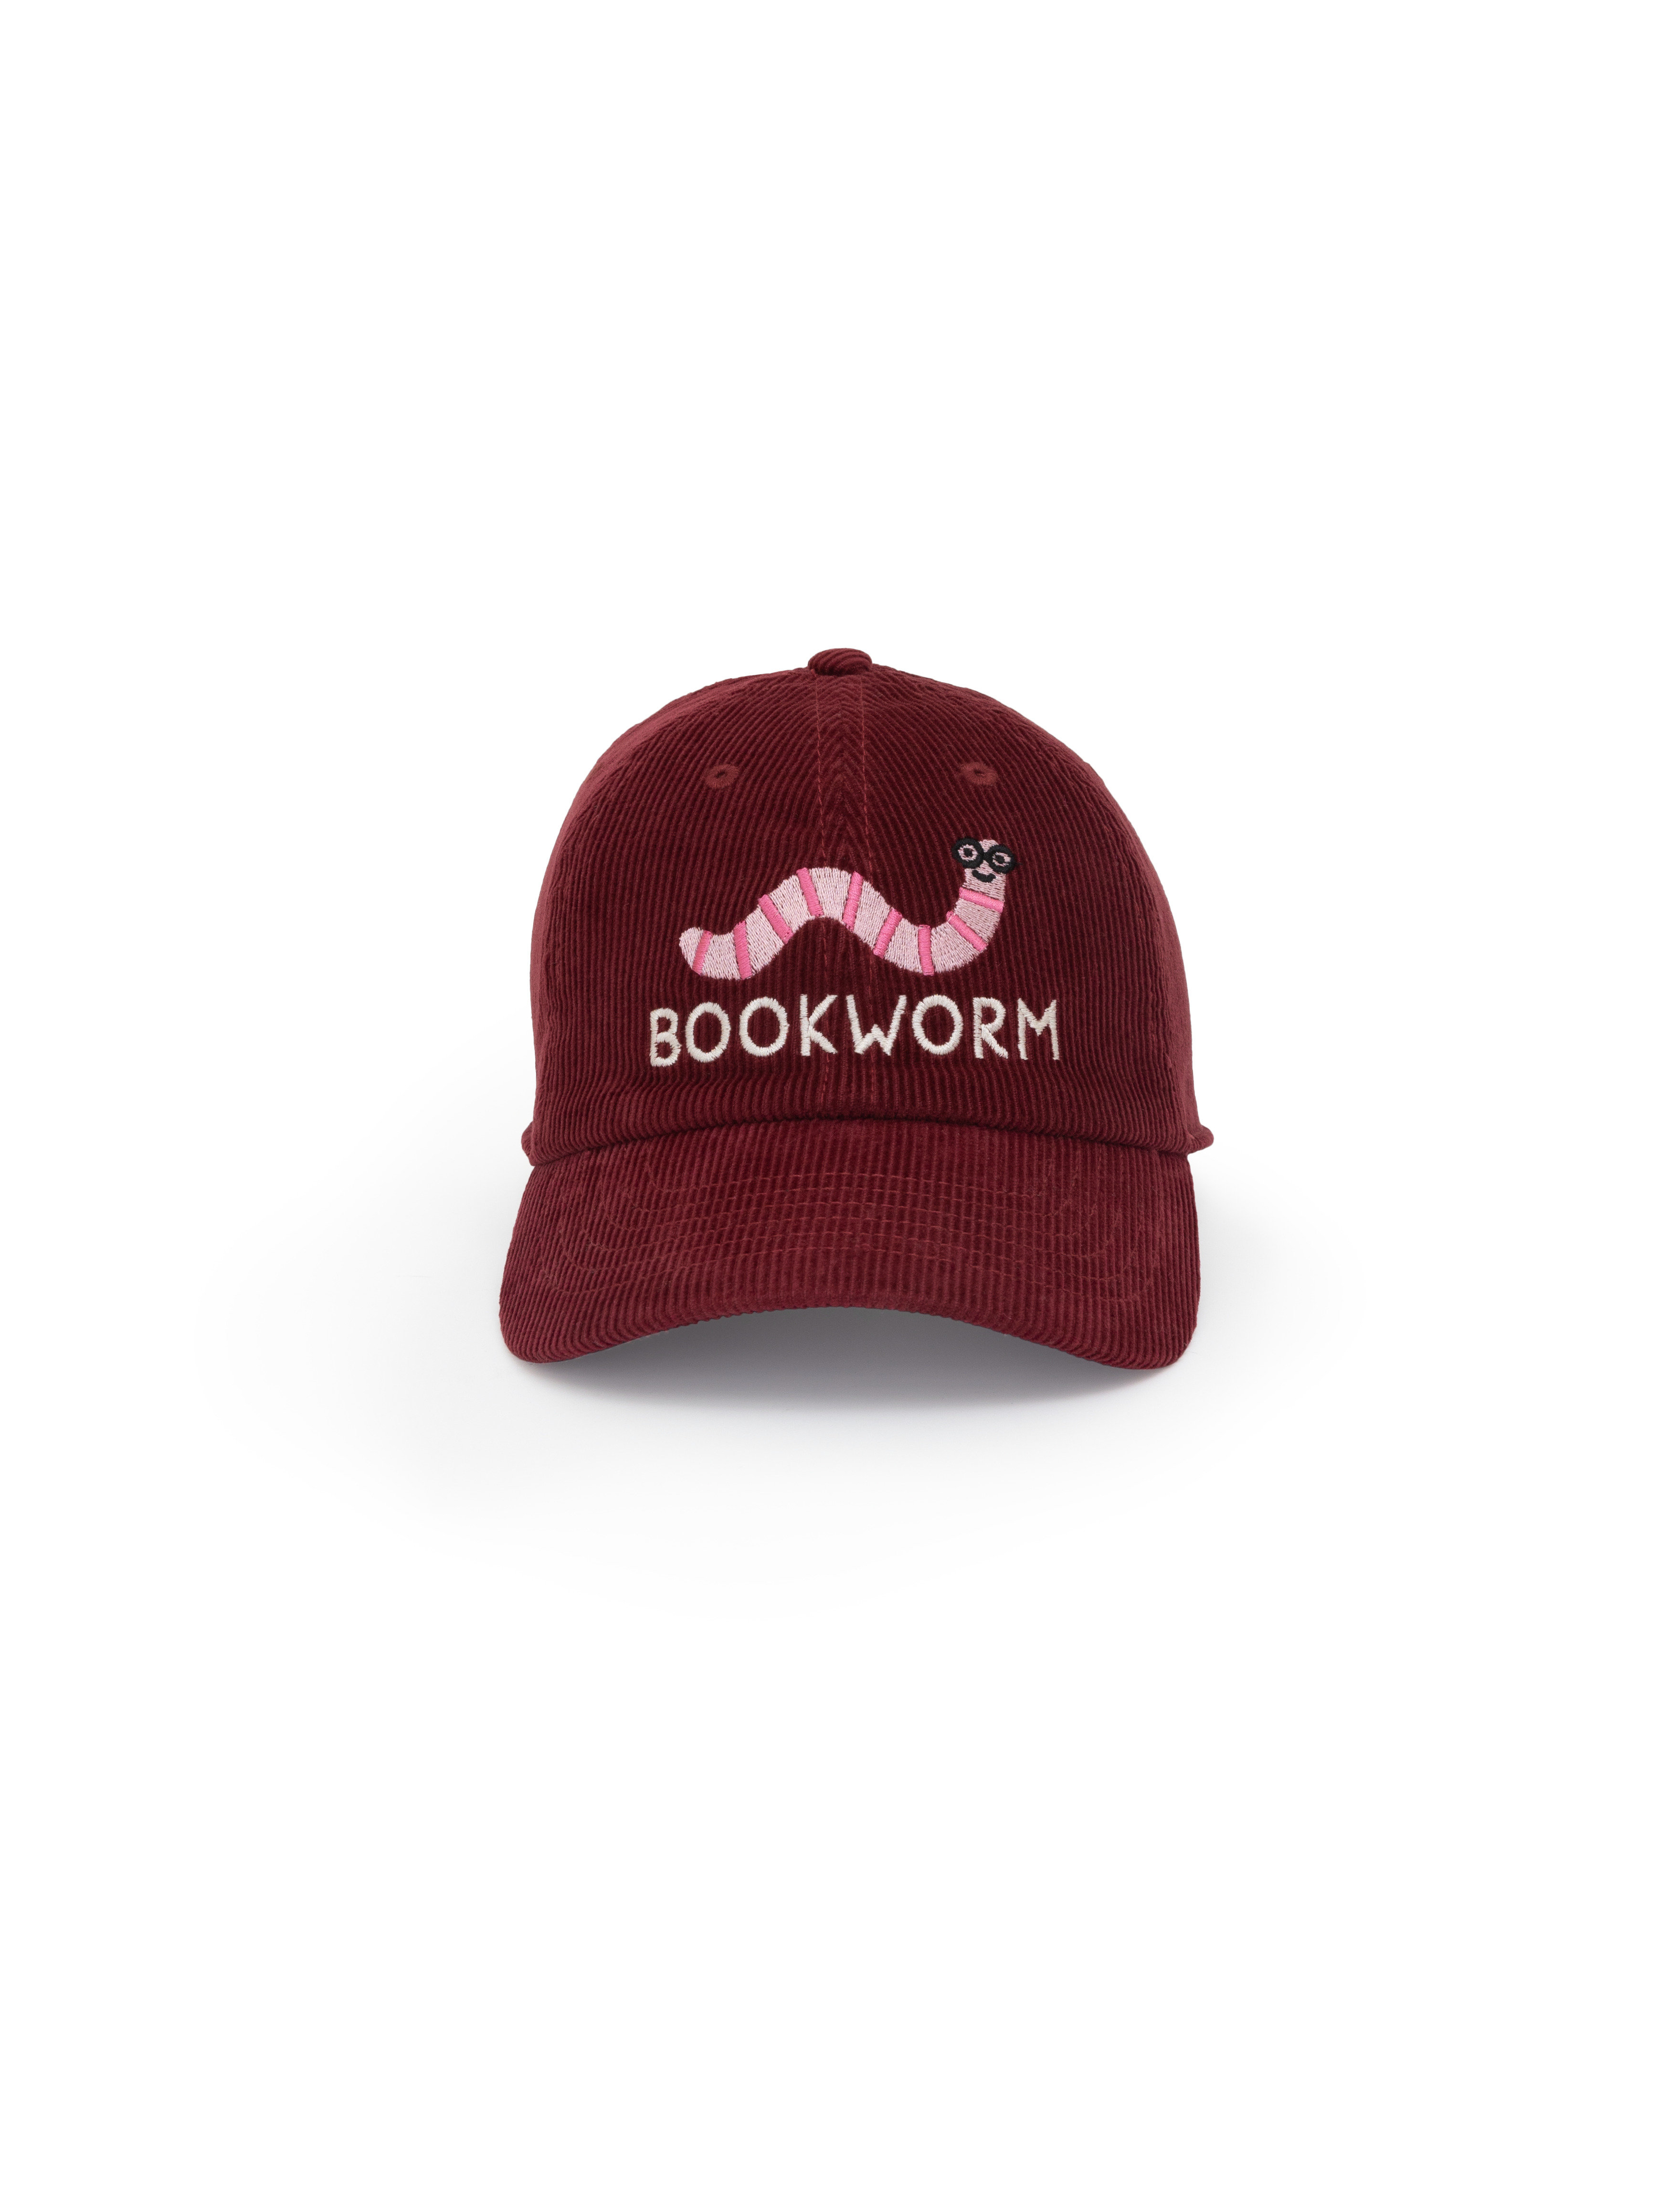 Bookworm Hat